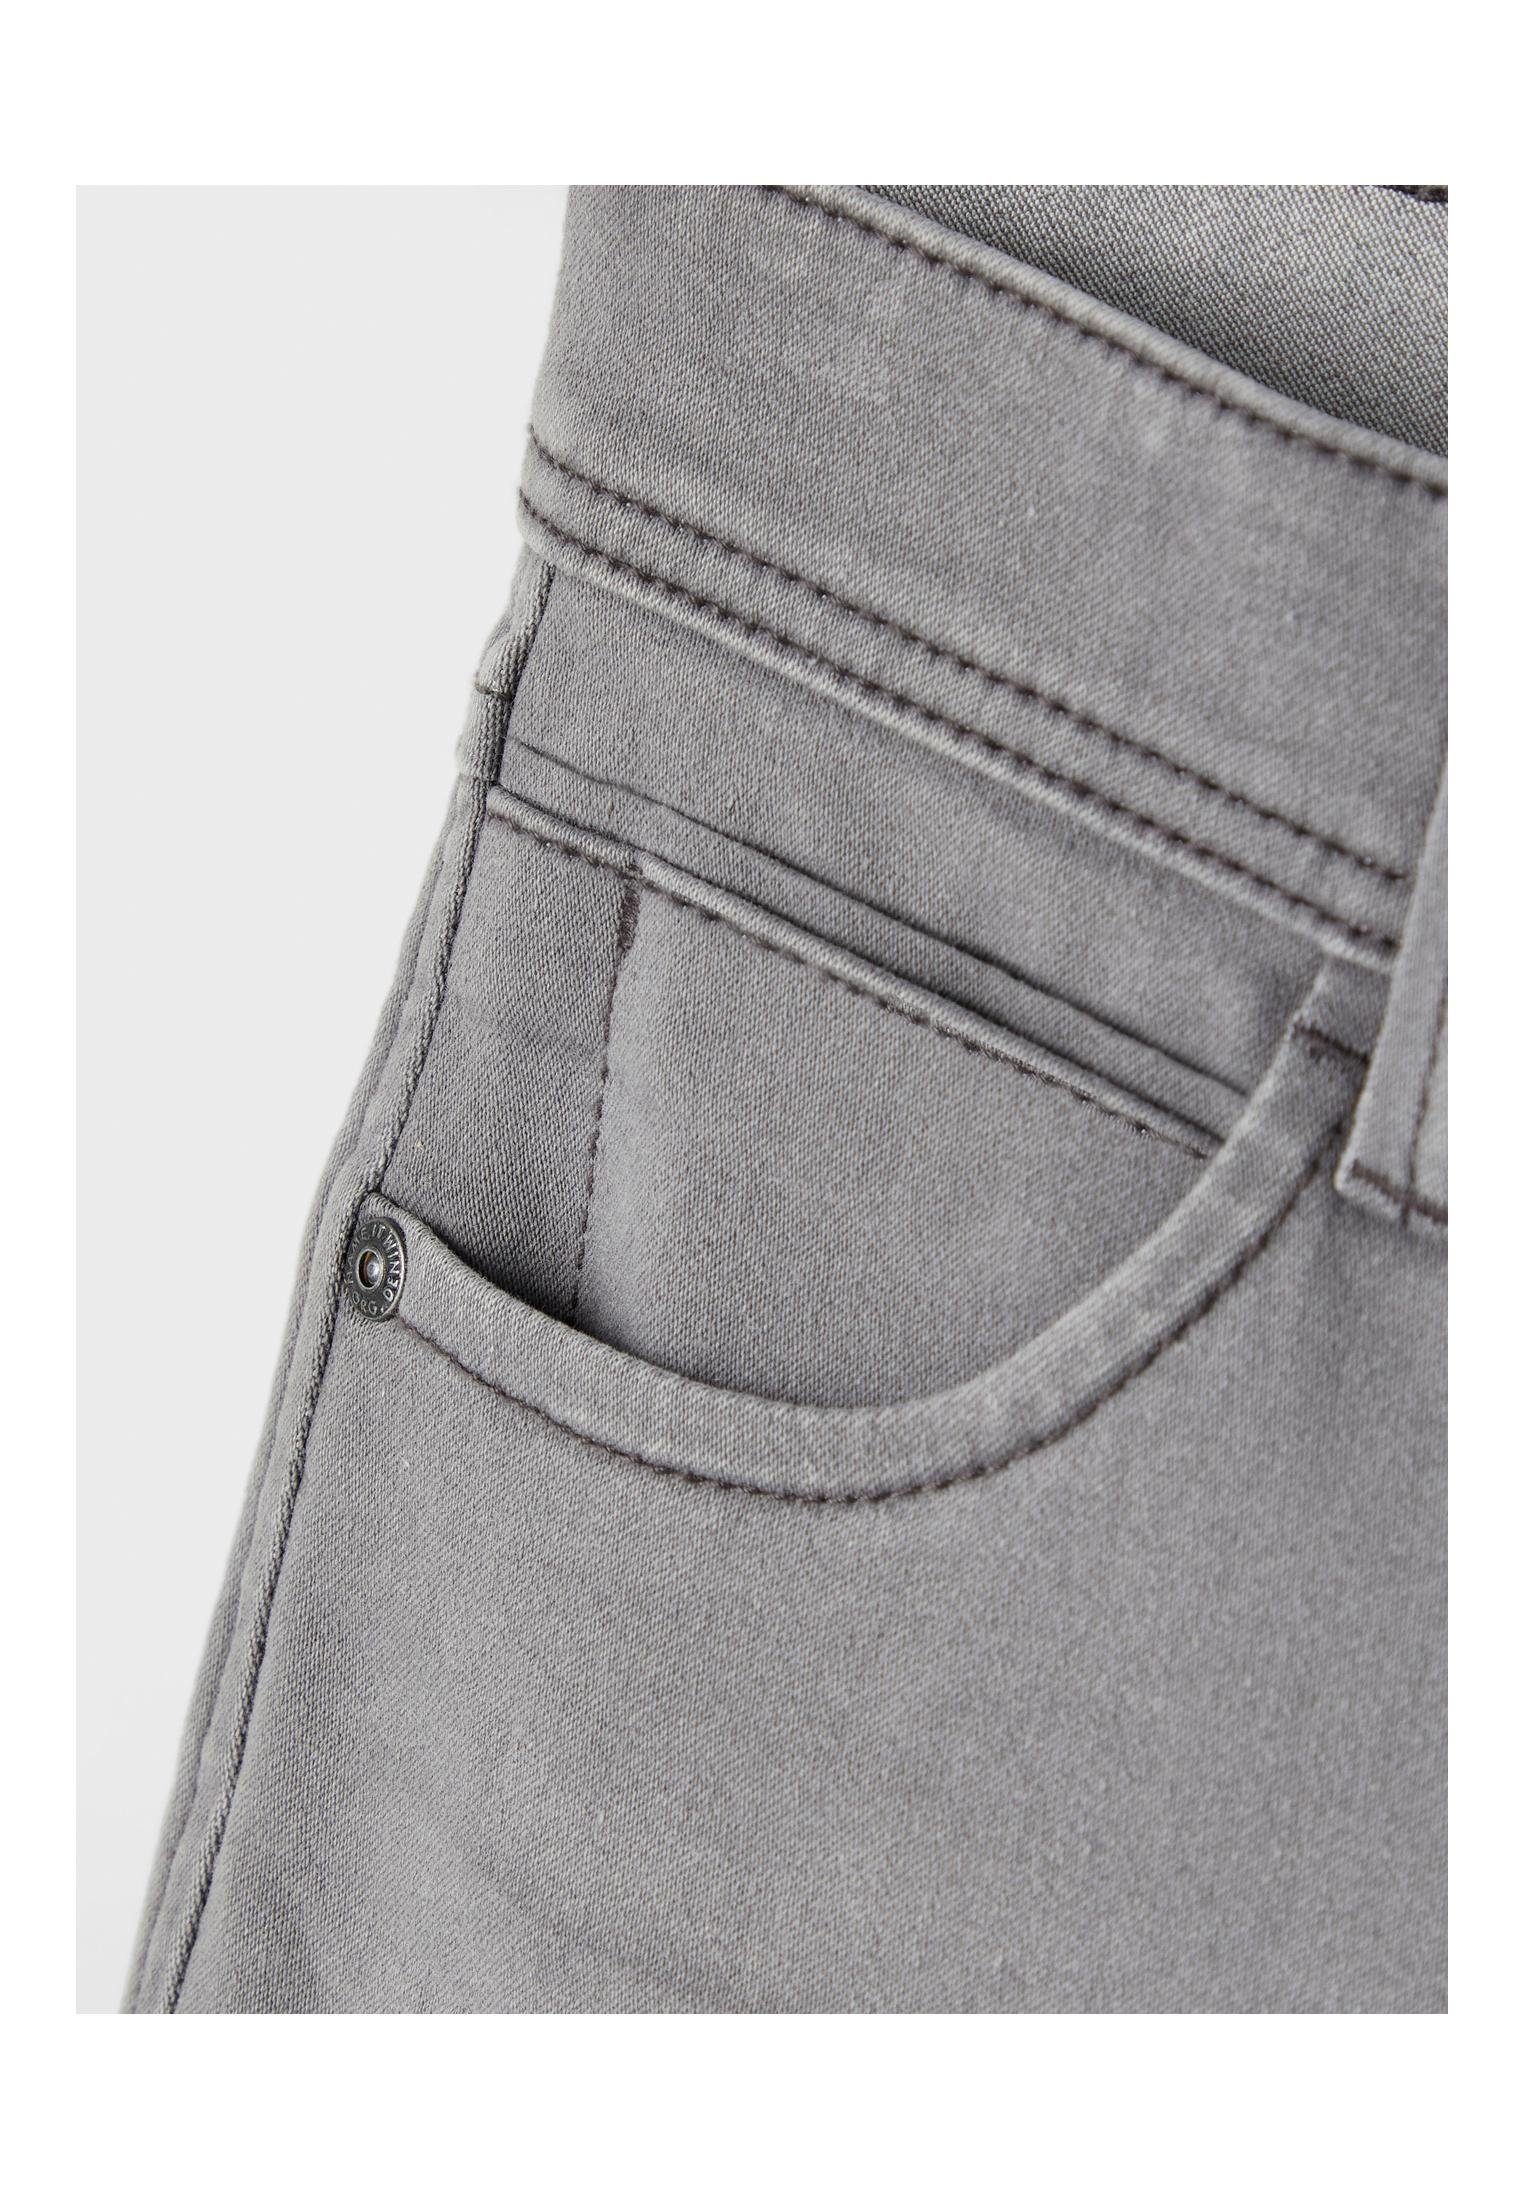 NKMSILAS grey JEANS 2002-TX It Skinny-fit-Jeans medium Name XSLIM denim